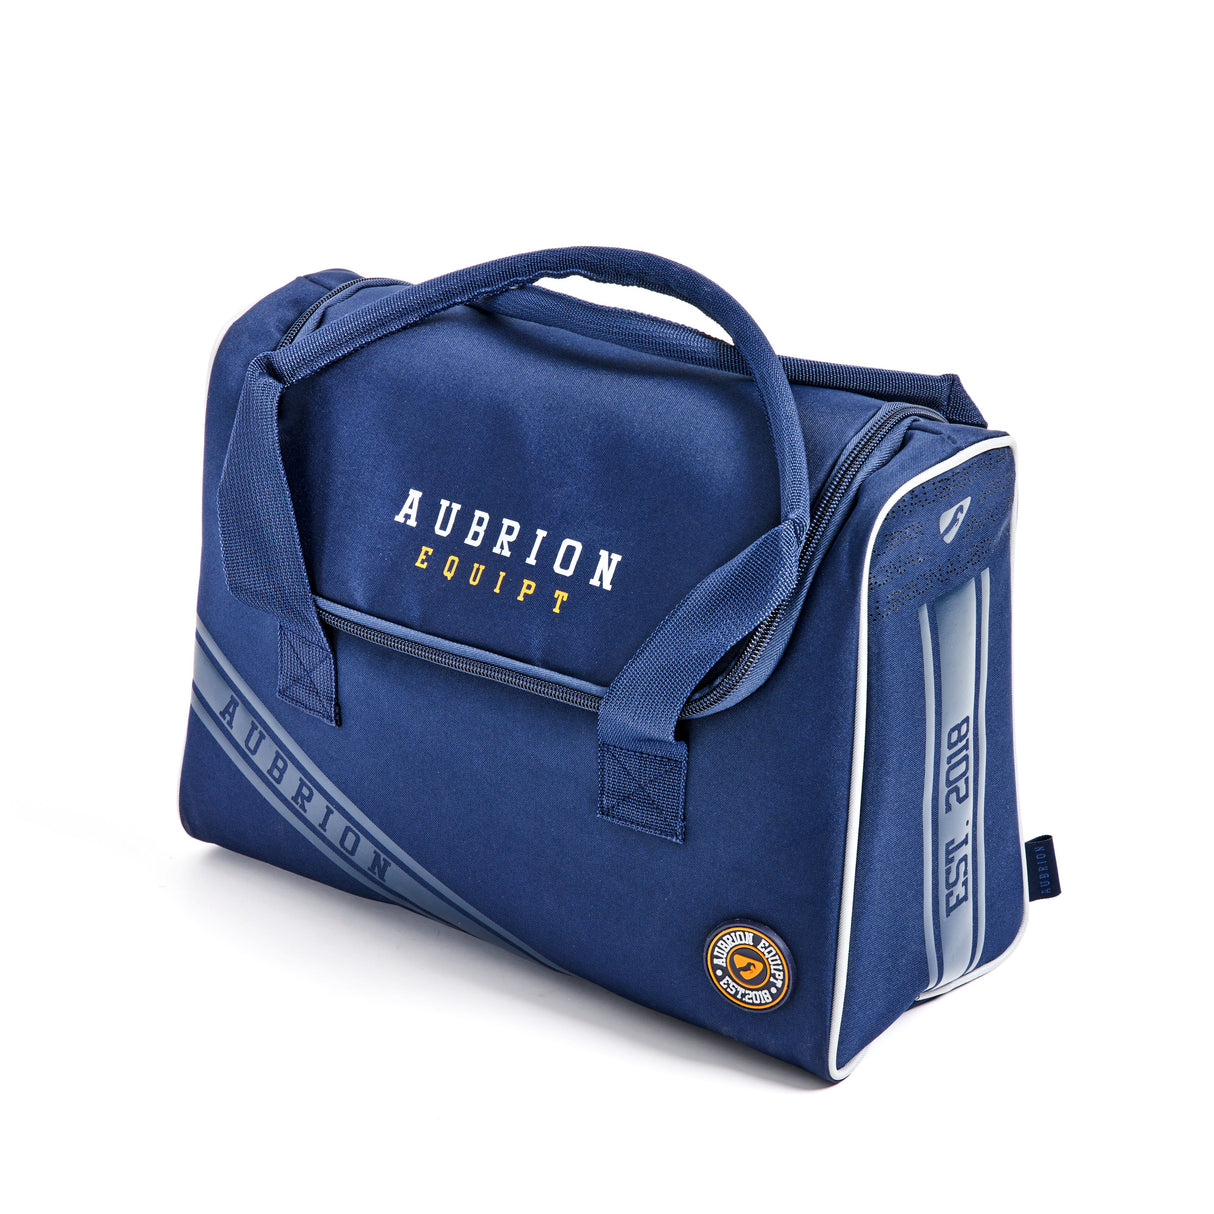 Aubrion Equipt Groomimg Kit Bag